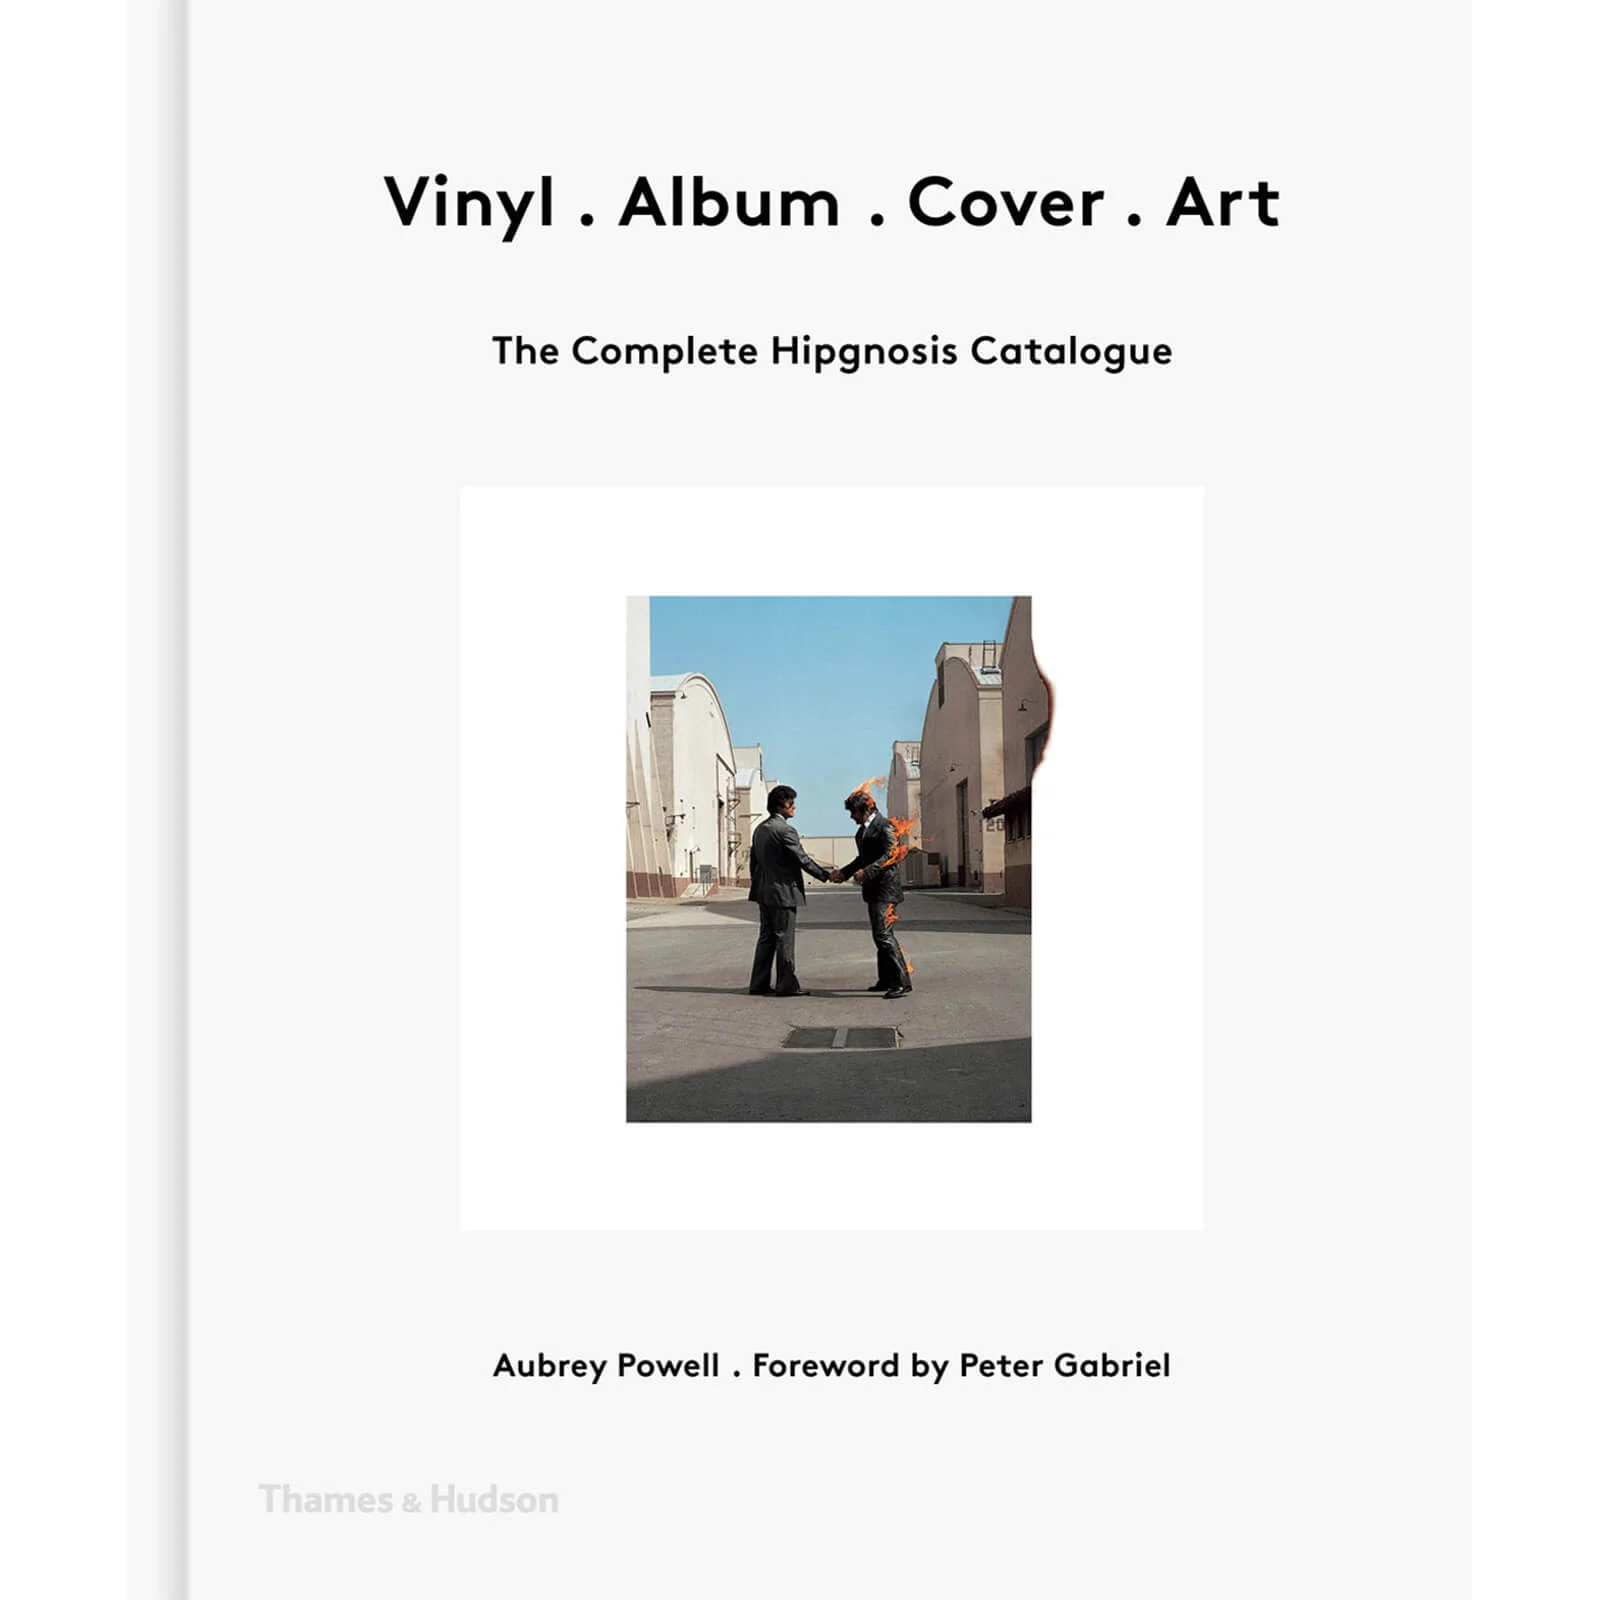 Thames and Hudson Ltd: Vinyl. Album. Cover. Art - The Complete Hipgnosis Catalogue Image 1